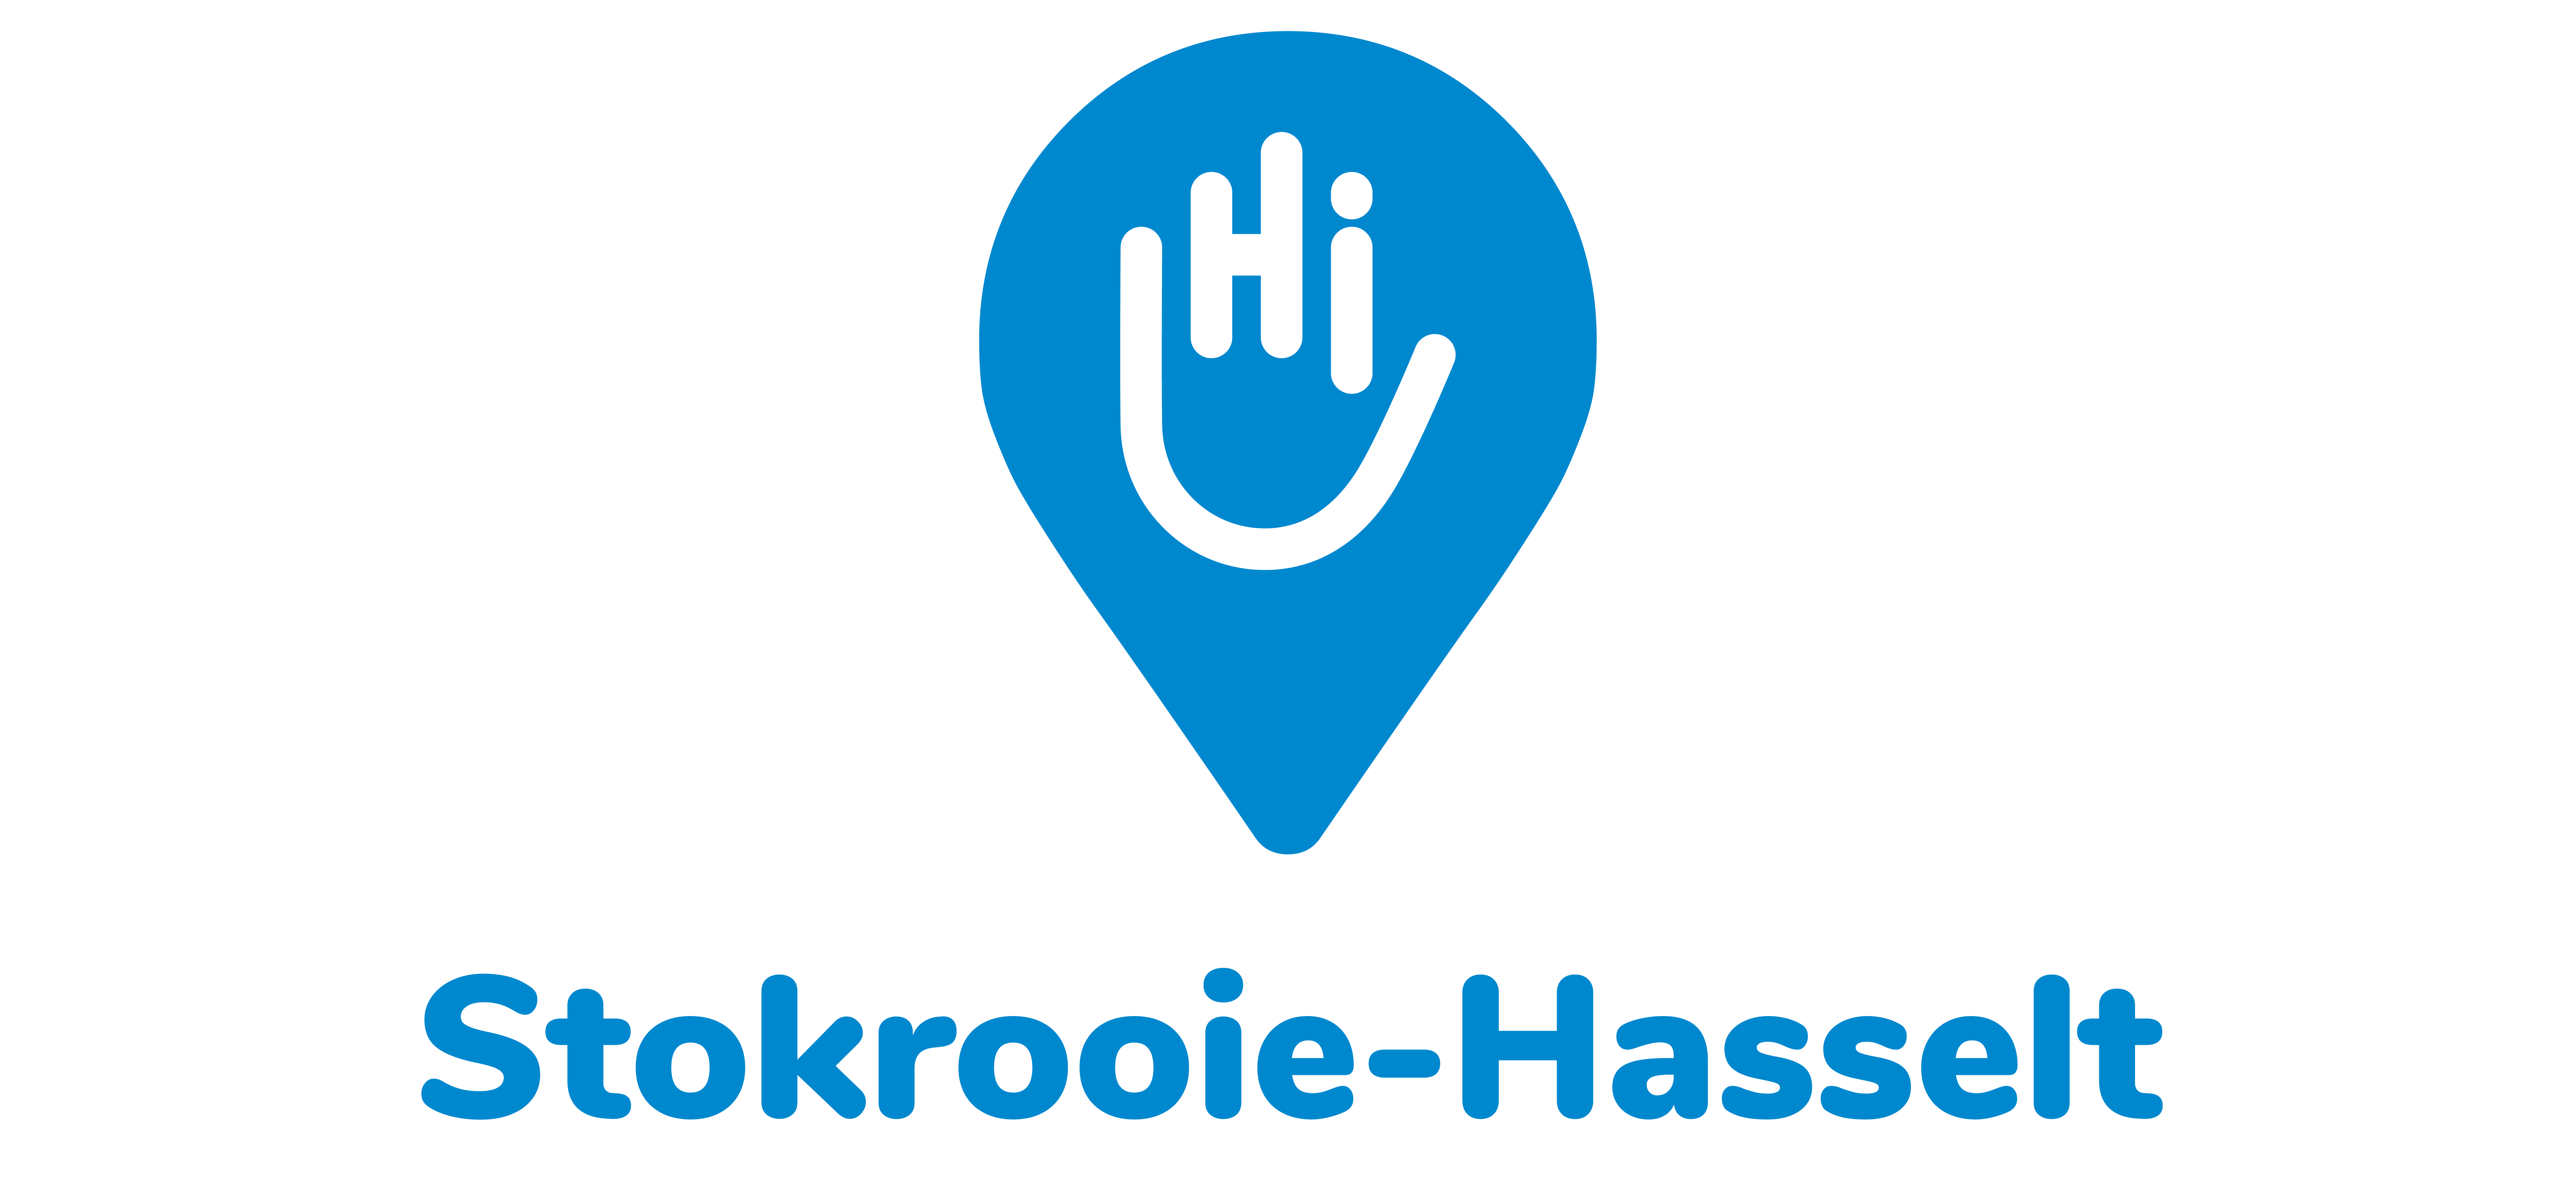 Pin Stokrooie-Hasselt